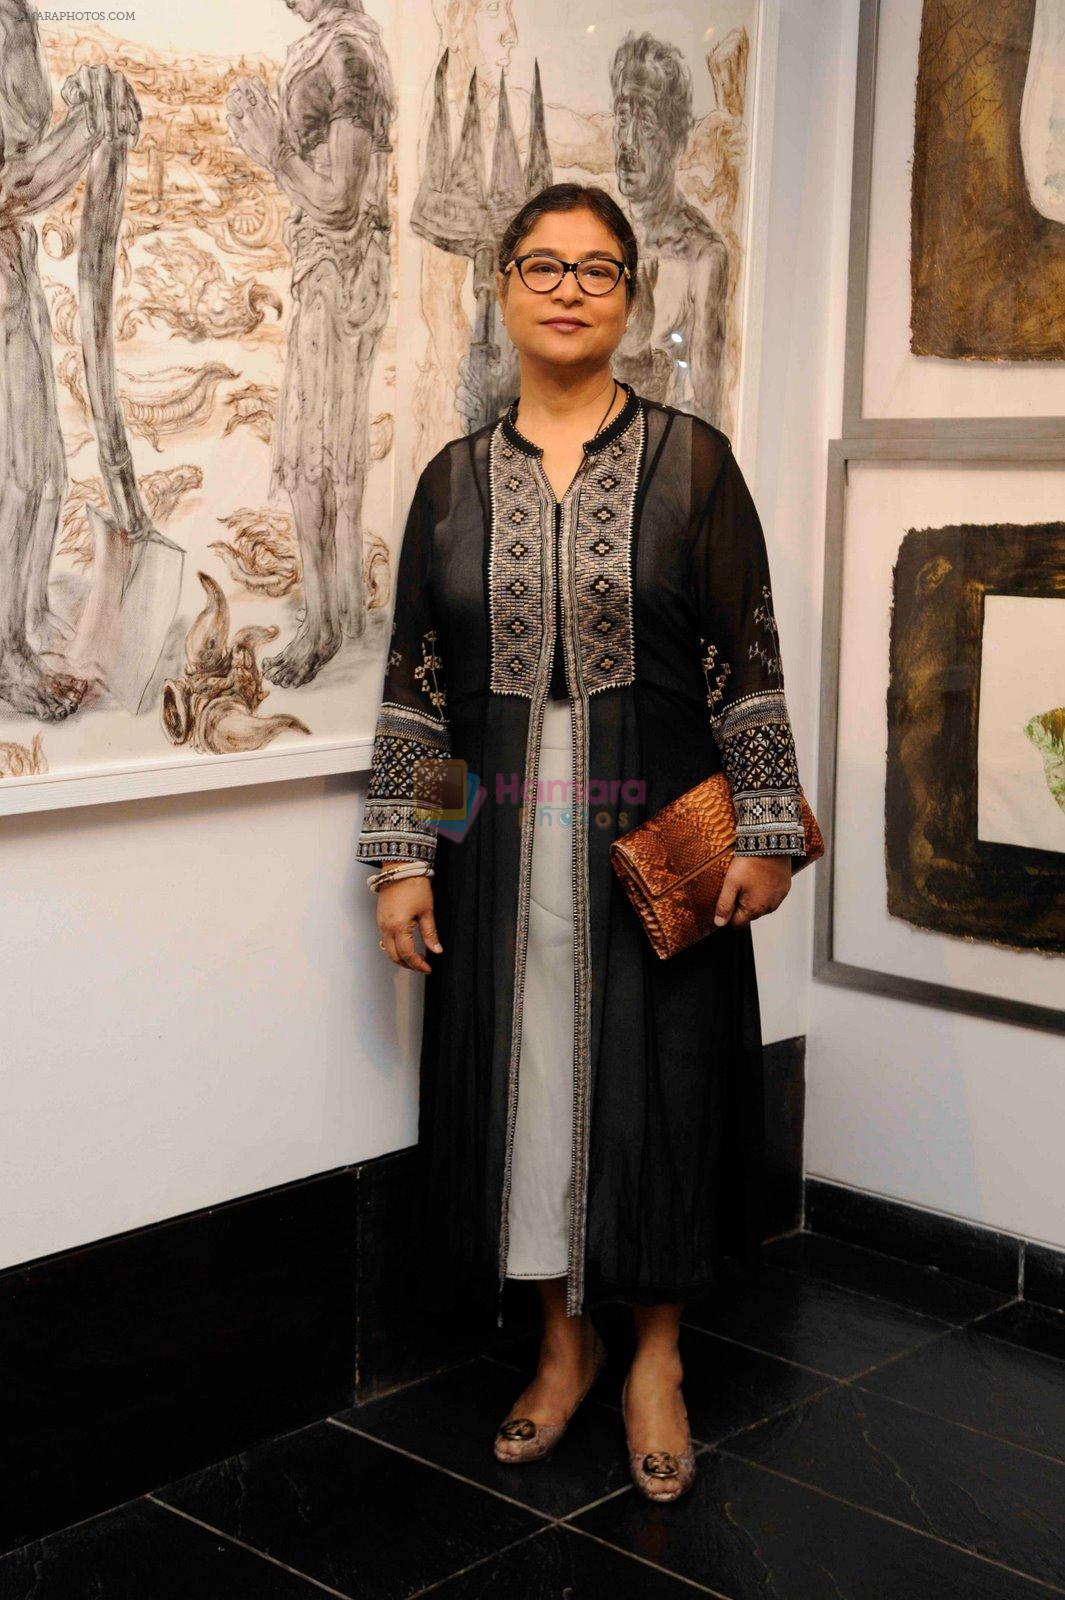 Jayasri Burman at Khushii art event in Tao Art Gallery on 22nd Nov 2014